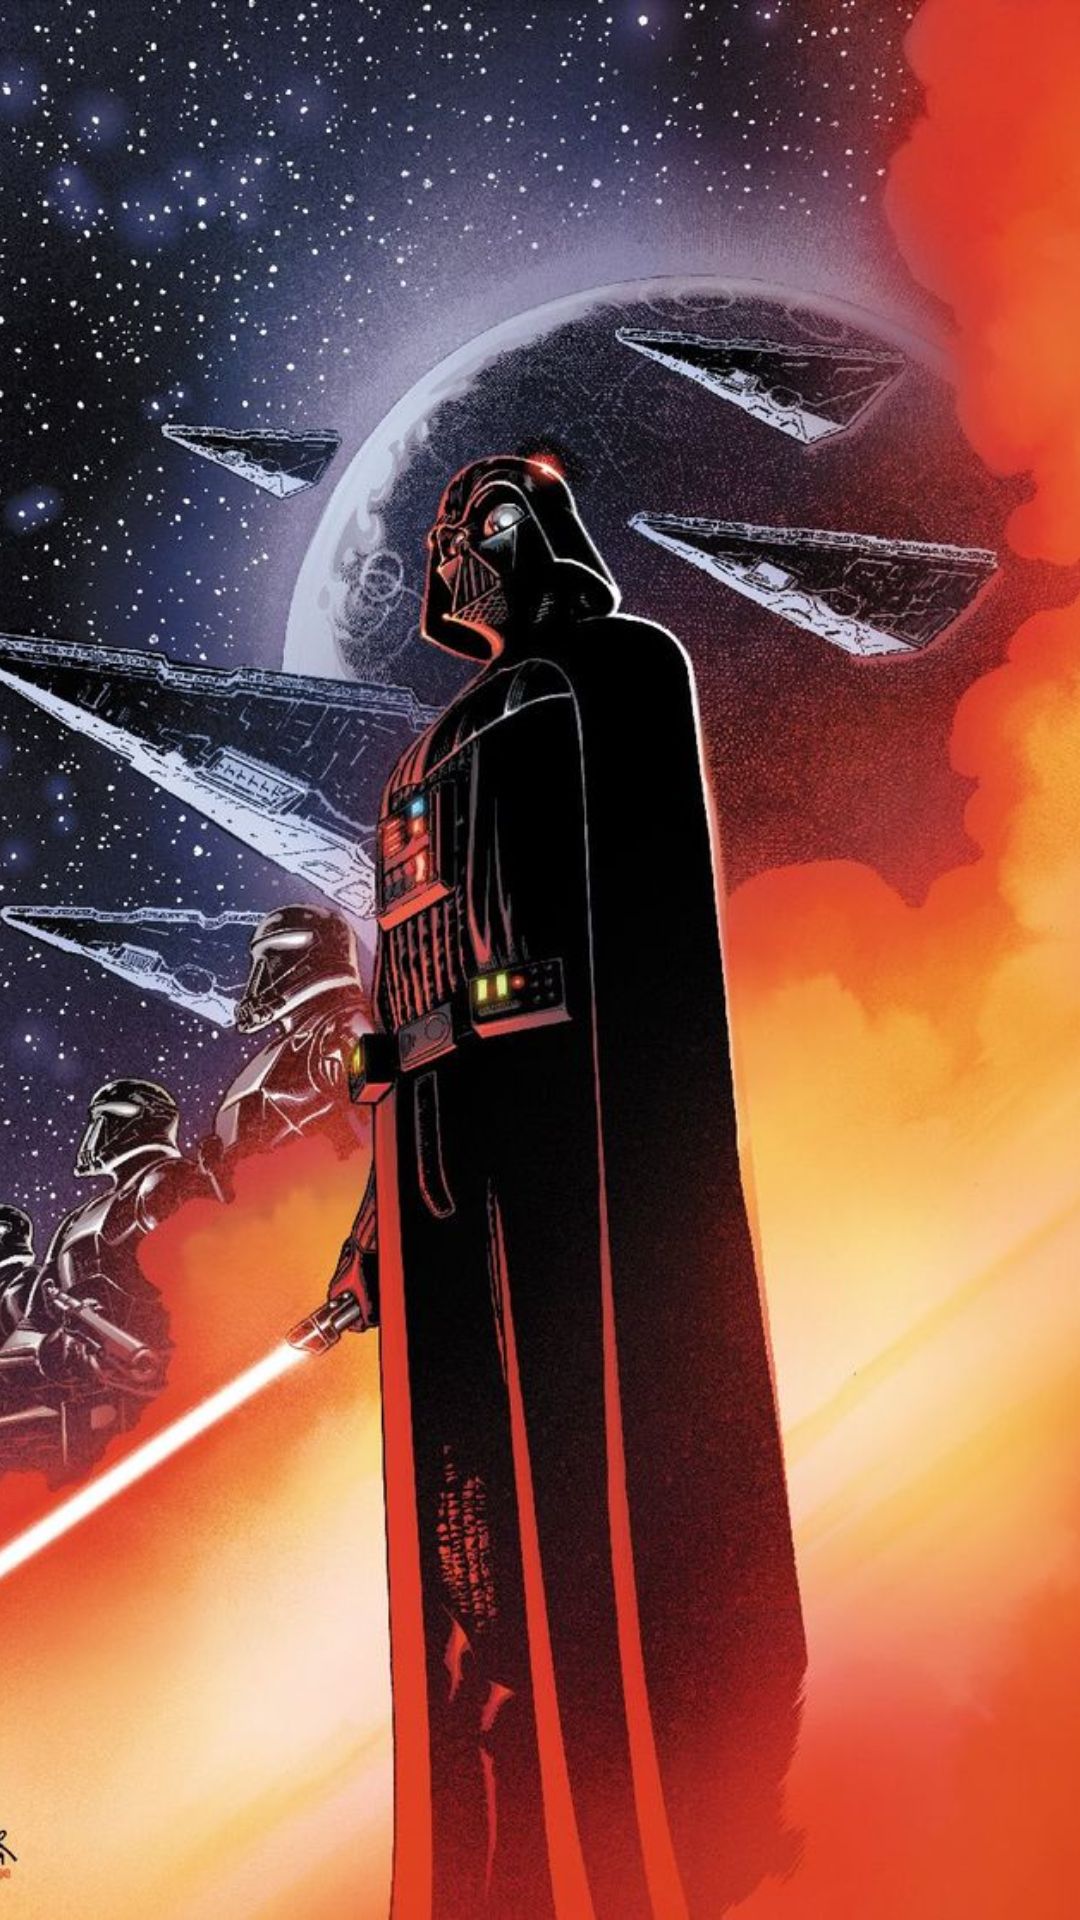 Darth Vader Wallpapers - Top 50 Best Darth Vader Wallpapers [ HQ ]